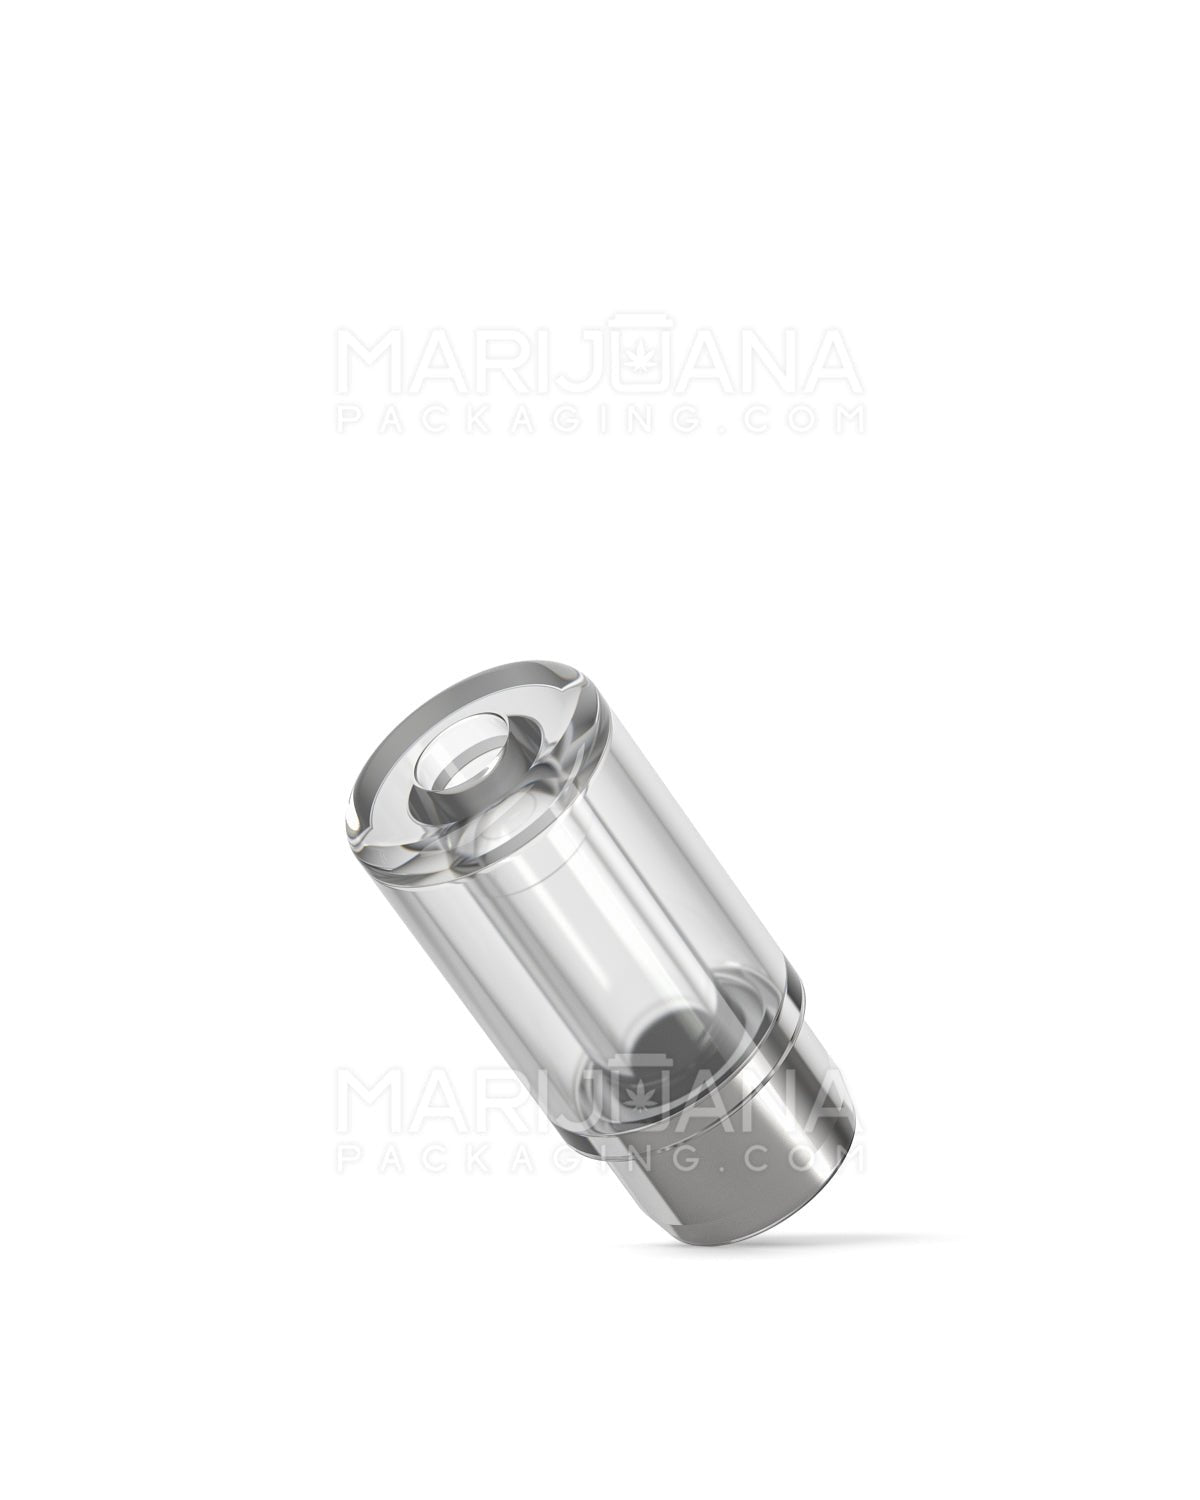 AVD | Barrel Vape Mouthpiece for GoodCarts Plastic Cartridges | Clear Plastic - Eazy Press - 600 Count - 4